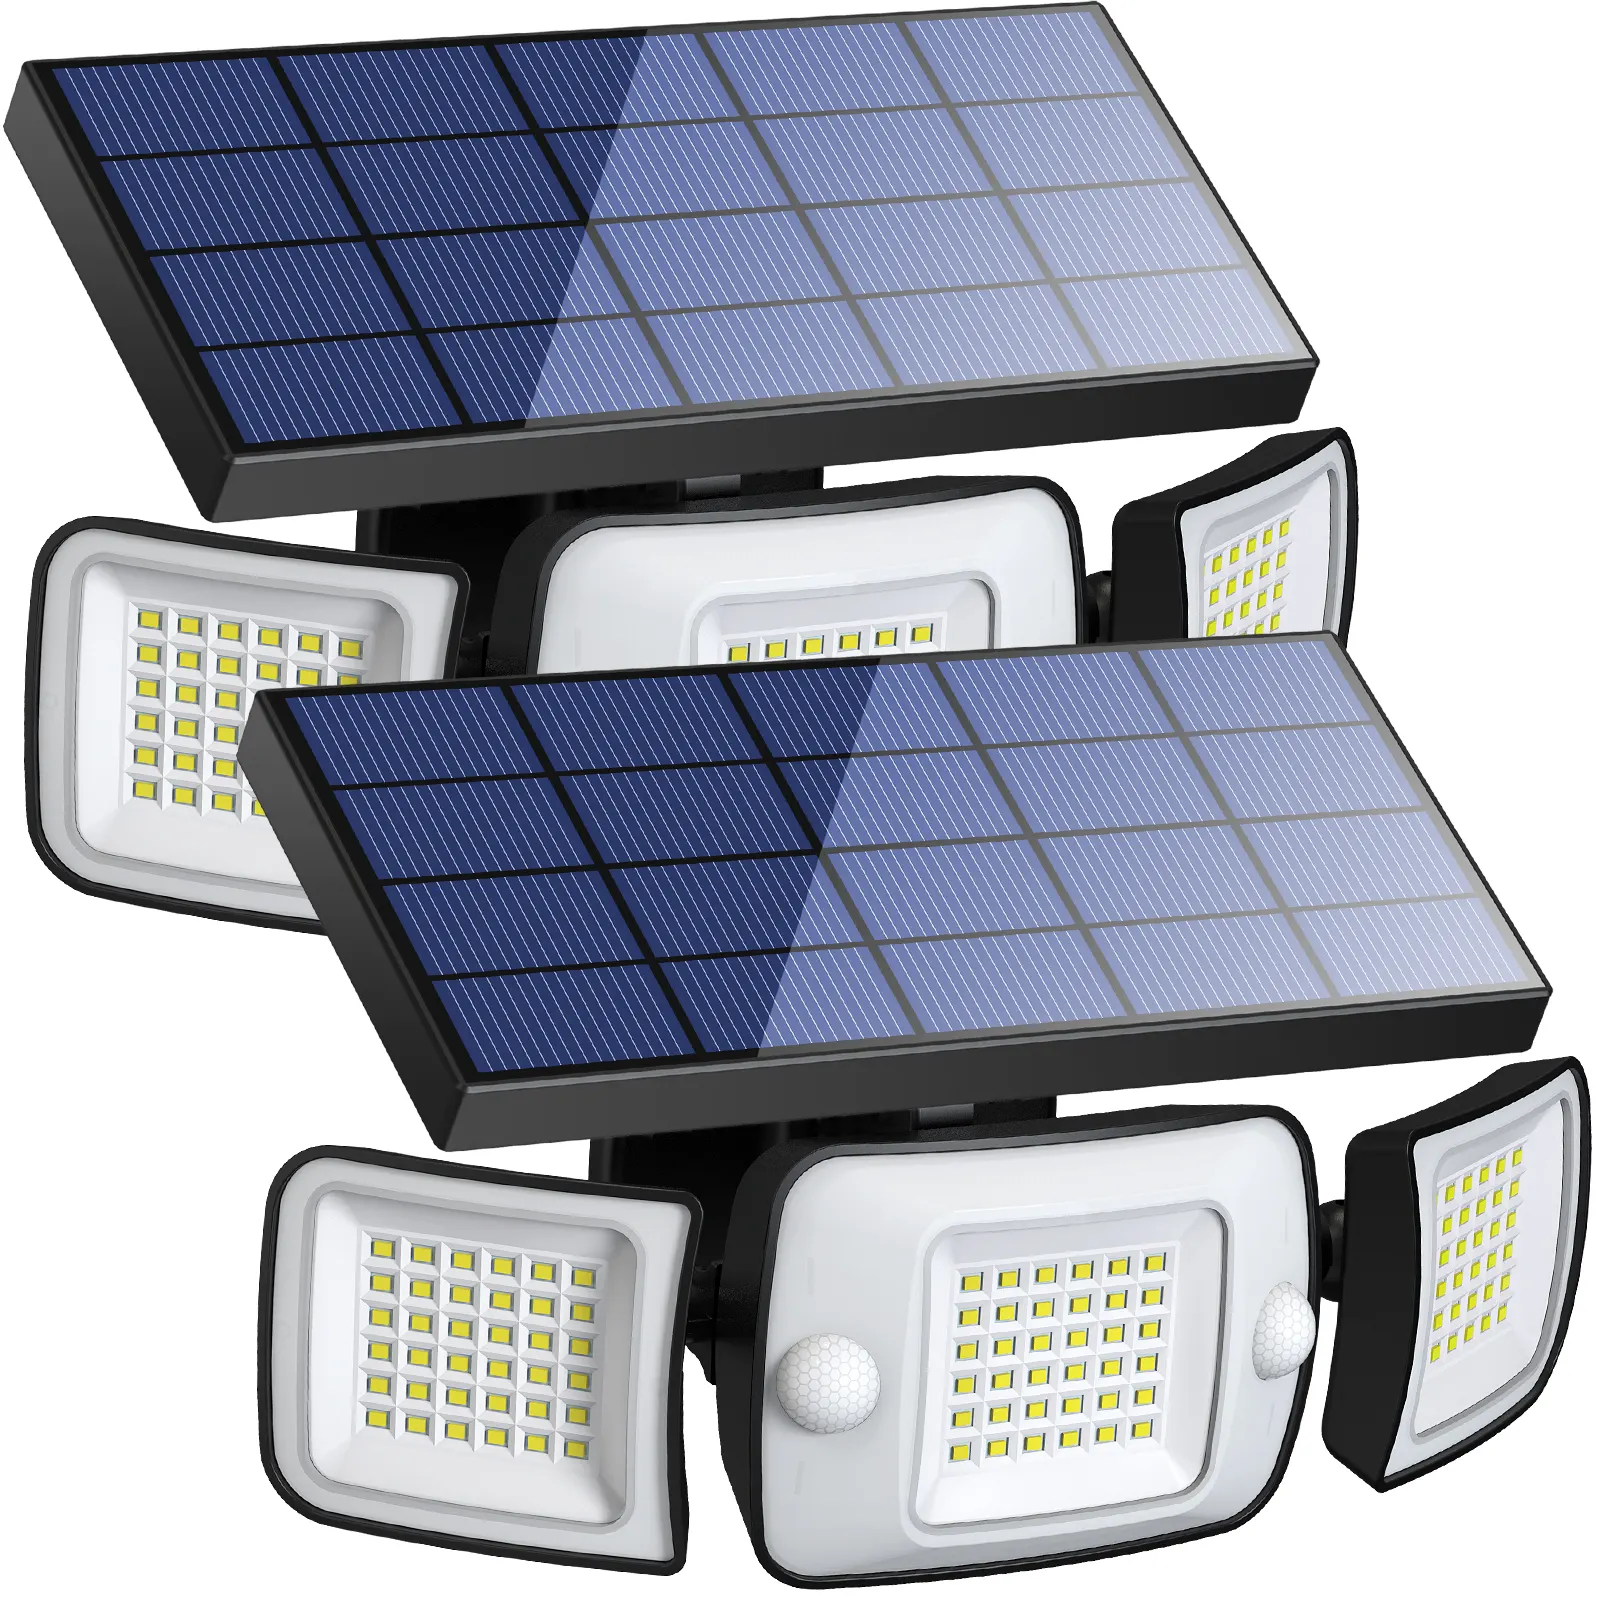 intelamp Solar Motion Sensor Lights Flood Lights Outdoor Waterproof Solar Security Lights for Patio Yard Garden Pathway